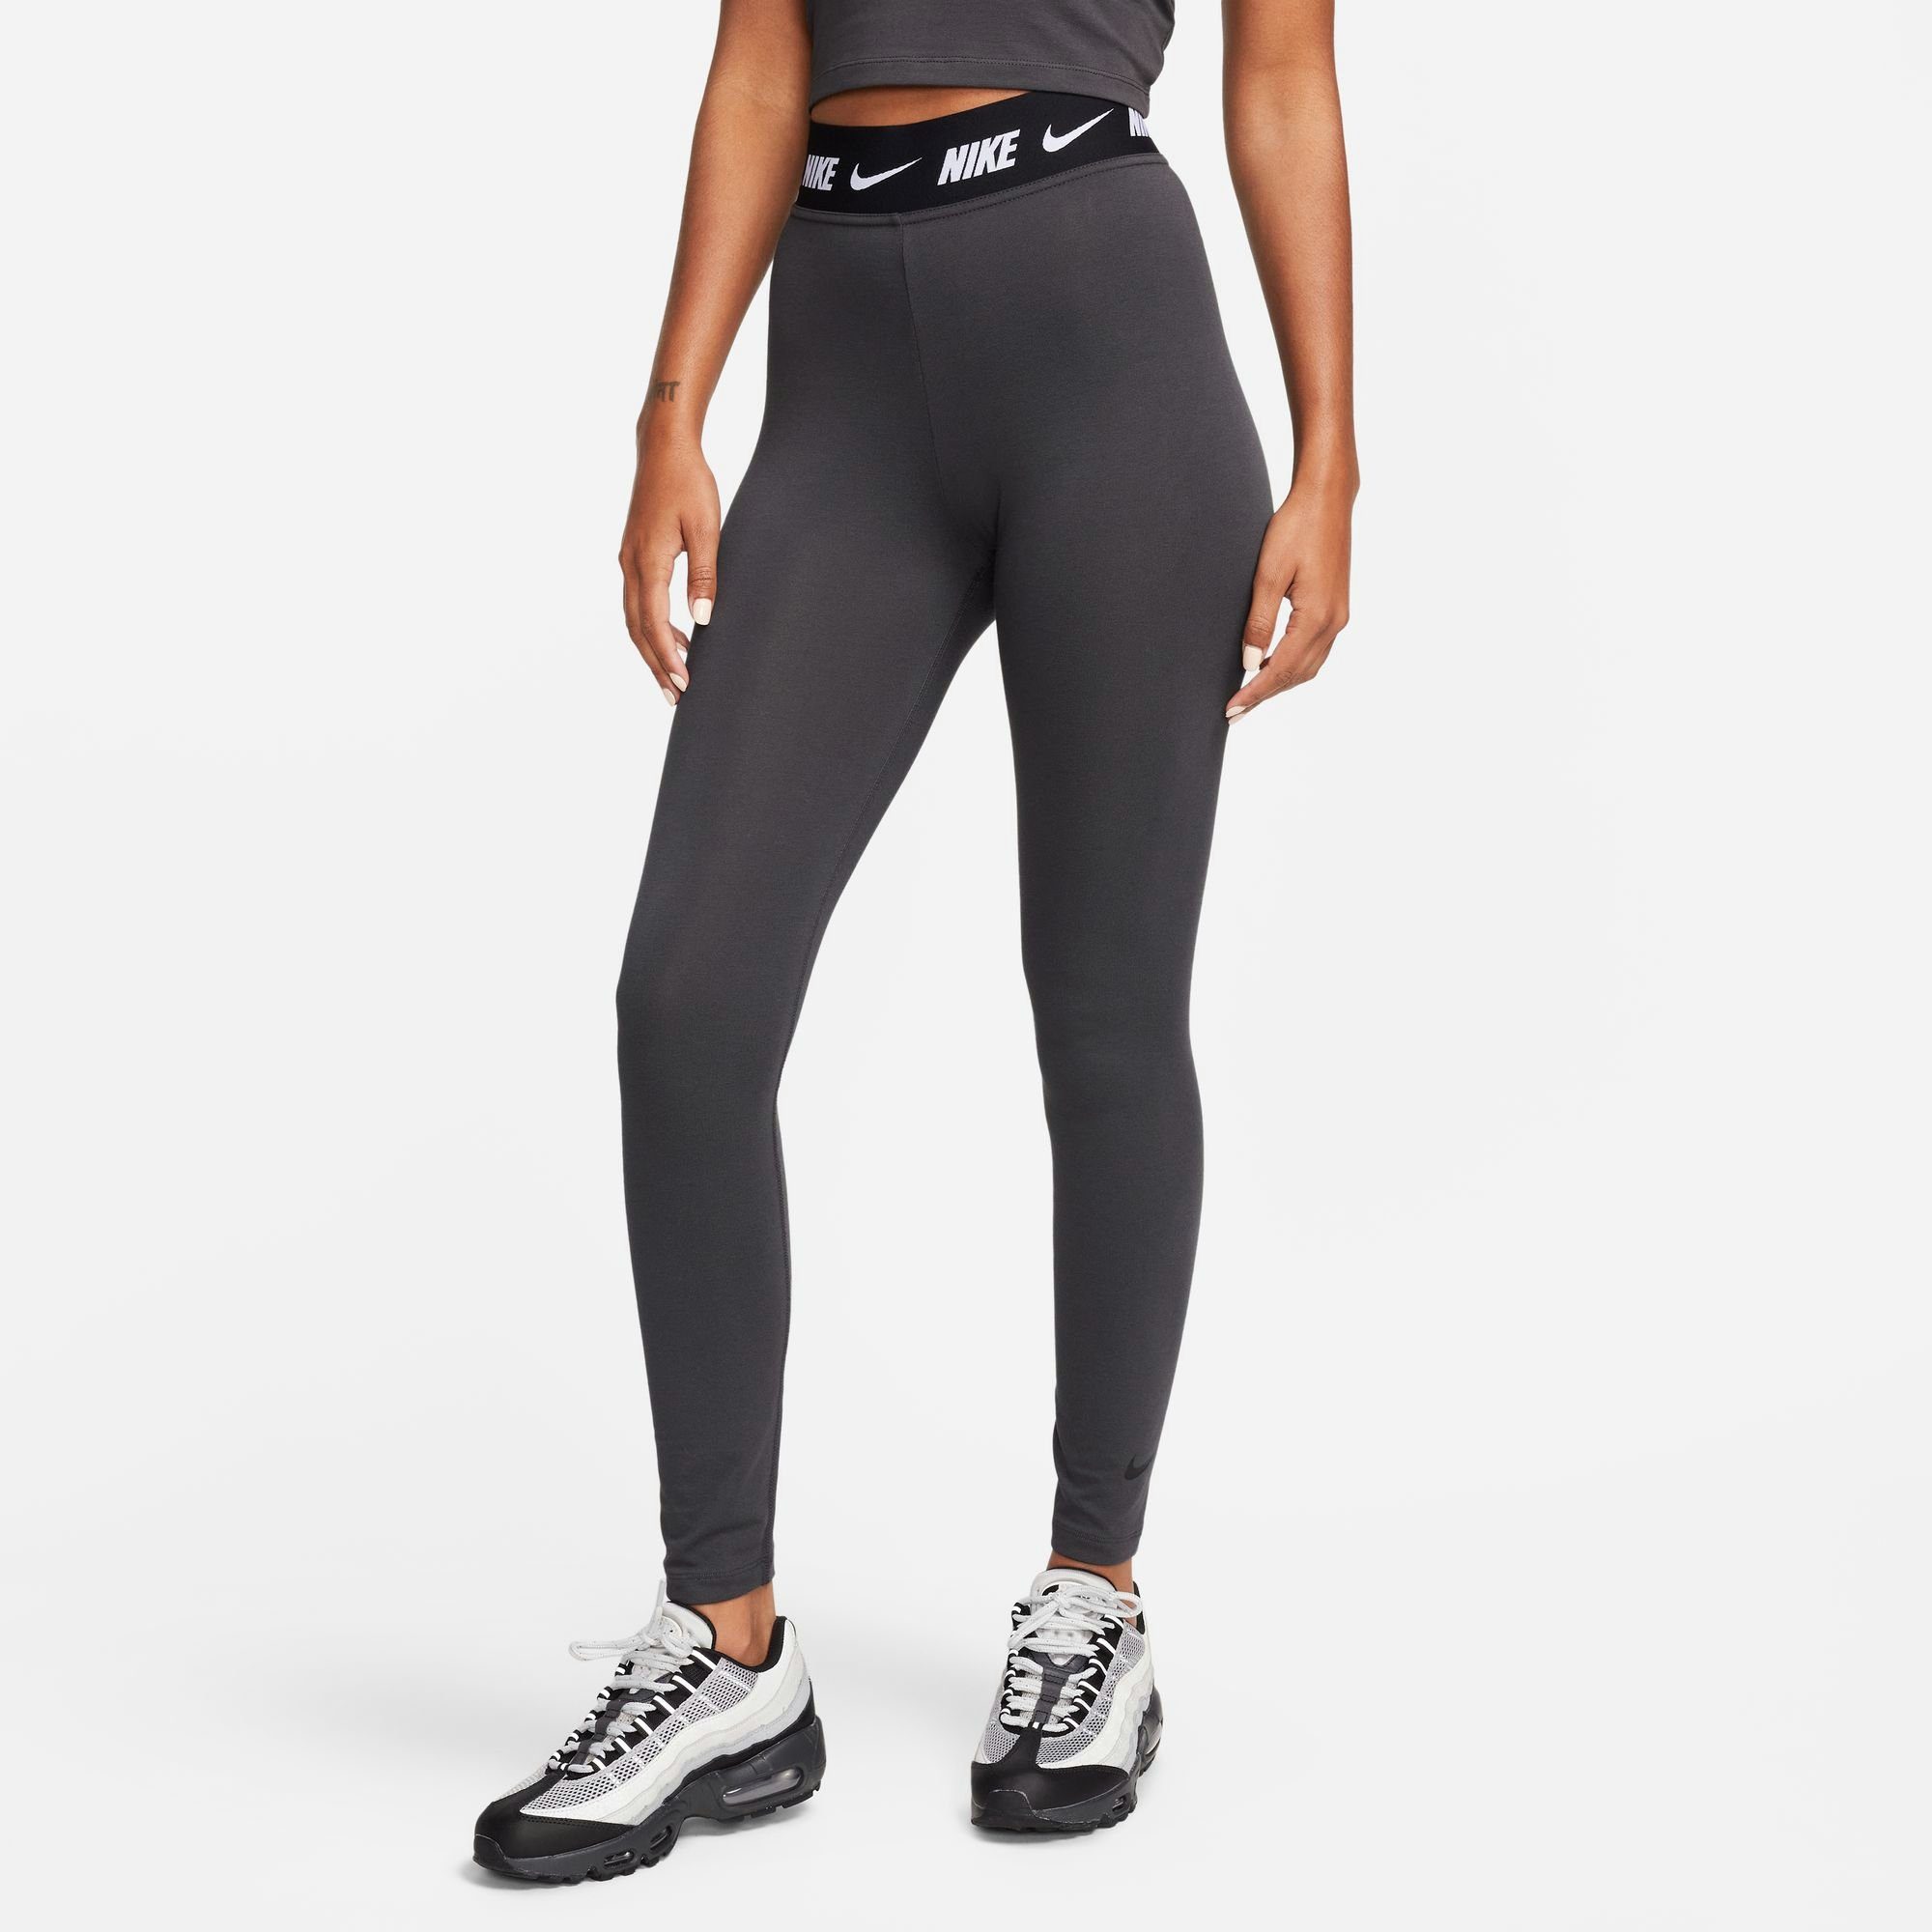 Leggings WOMEN'S CLUB ANTHRACITE/BLACK HIGH-WAISTED LEGGINGS Sportswear Nike